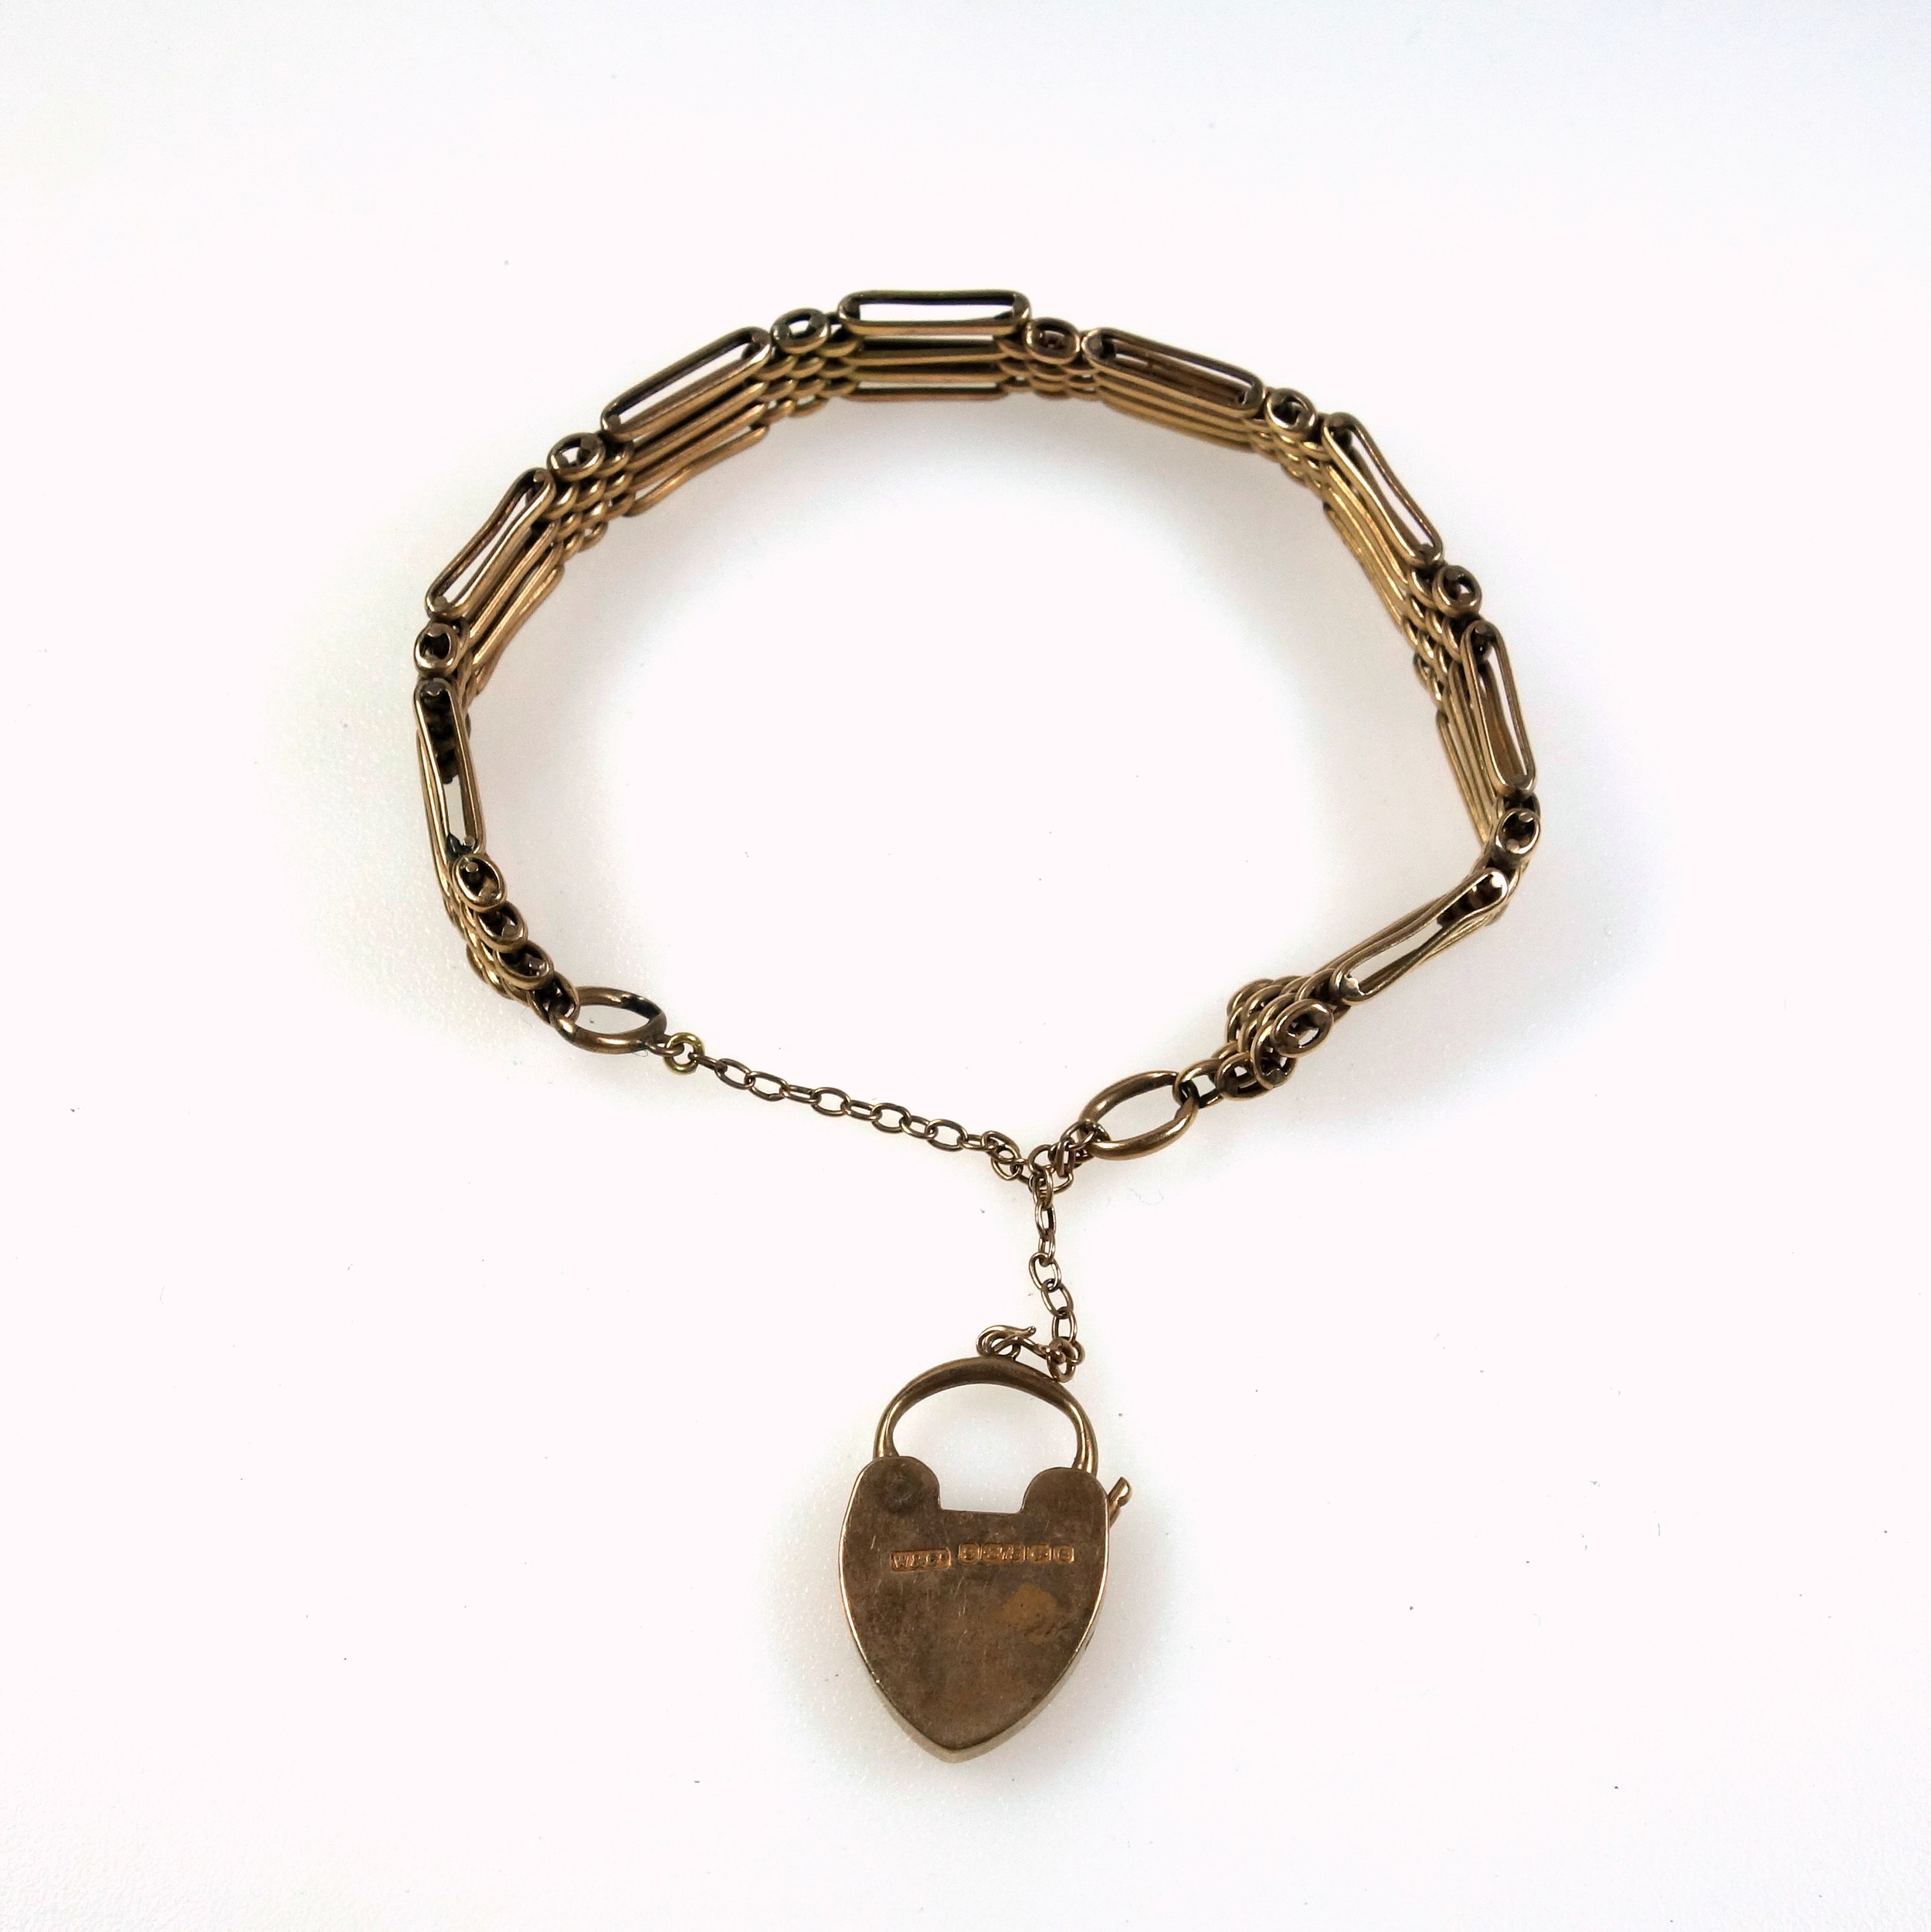 9ct gold gateleg bracelet with padlock clasp, 17.3 grams - Image 2 of 2